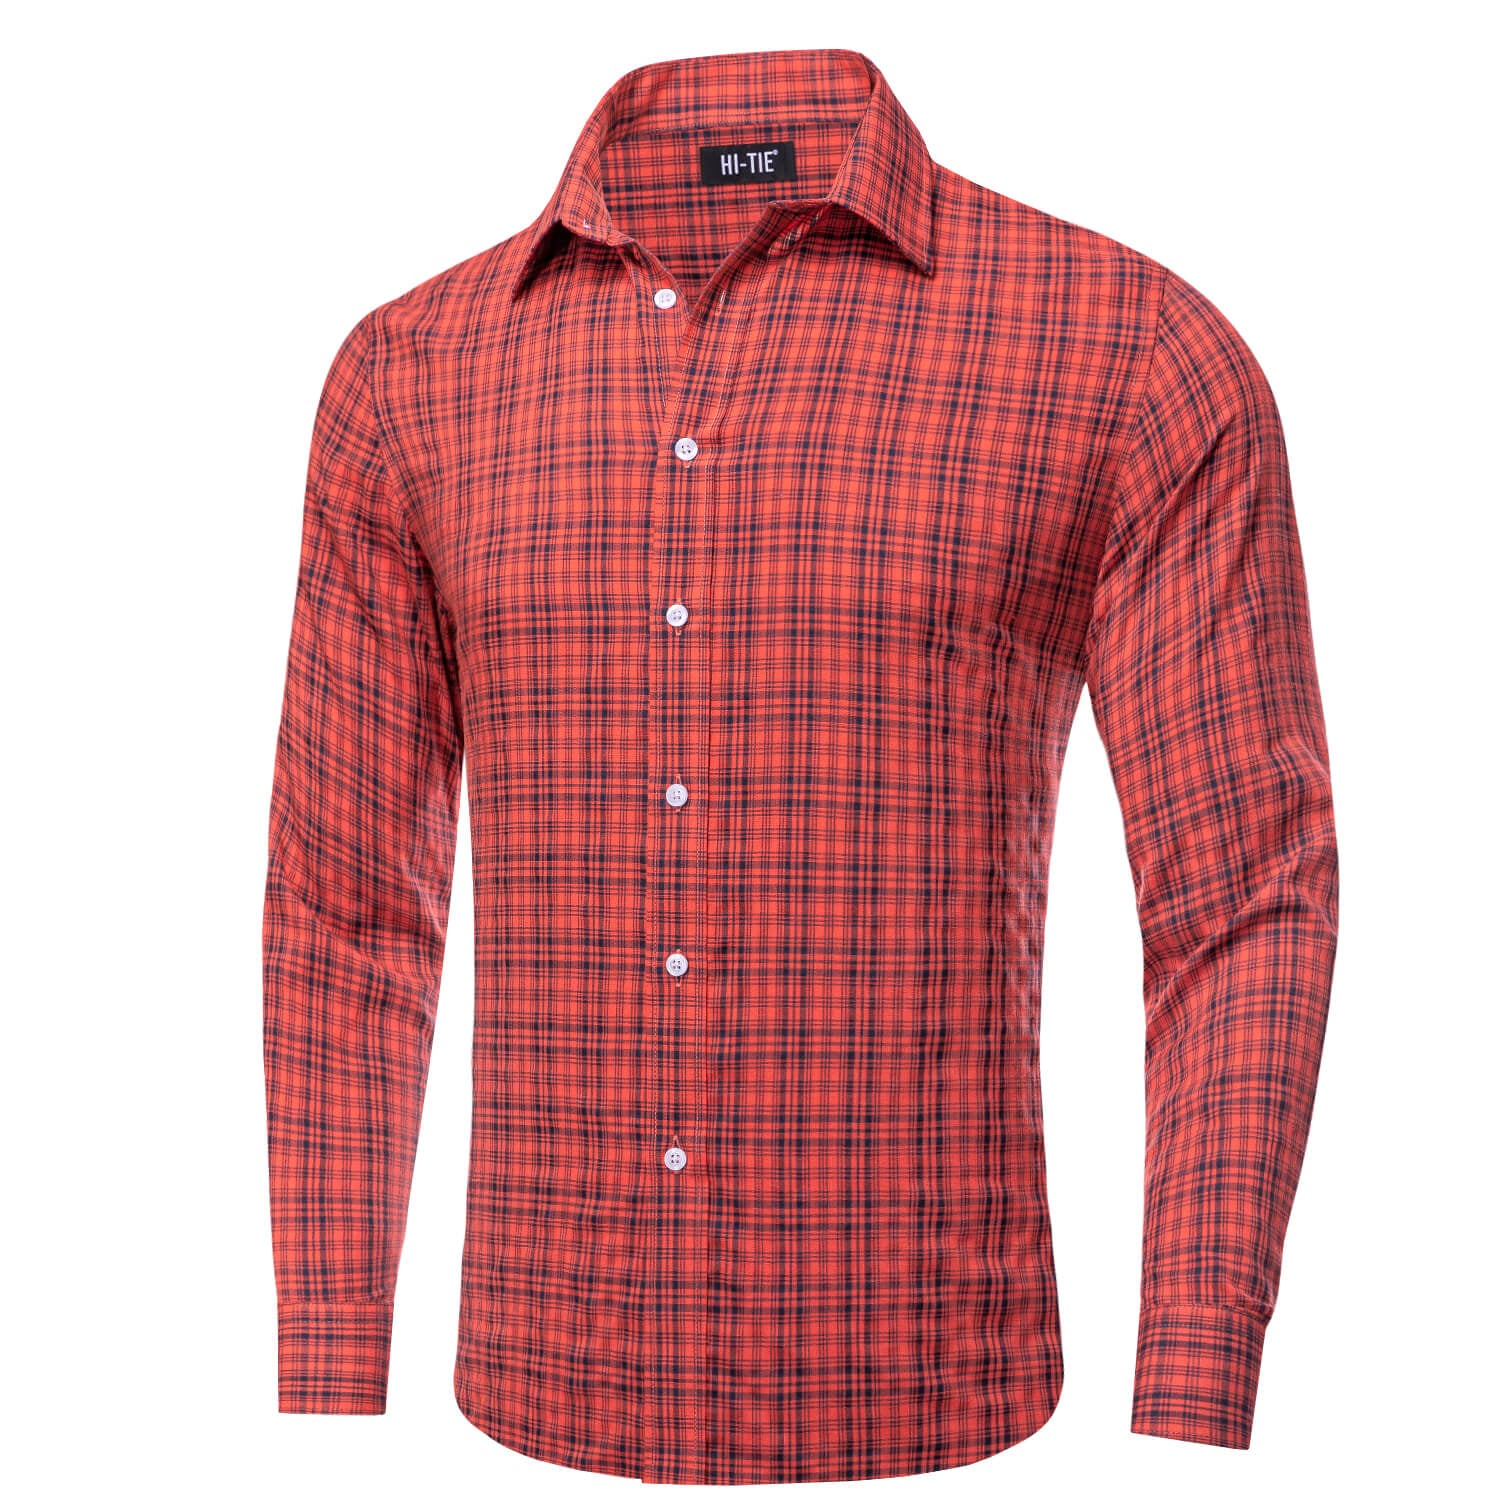 Hi-Tie Button Down Shirt Red Blue Plaid Silk Men's Shirt New Classic